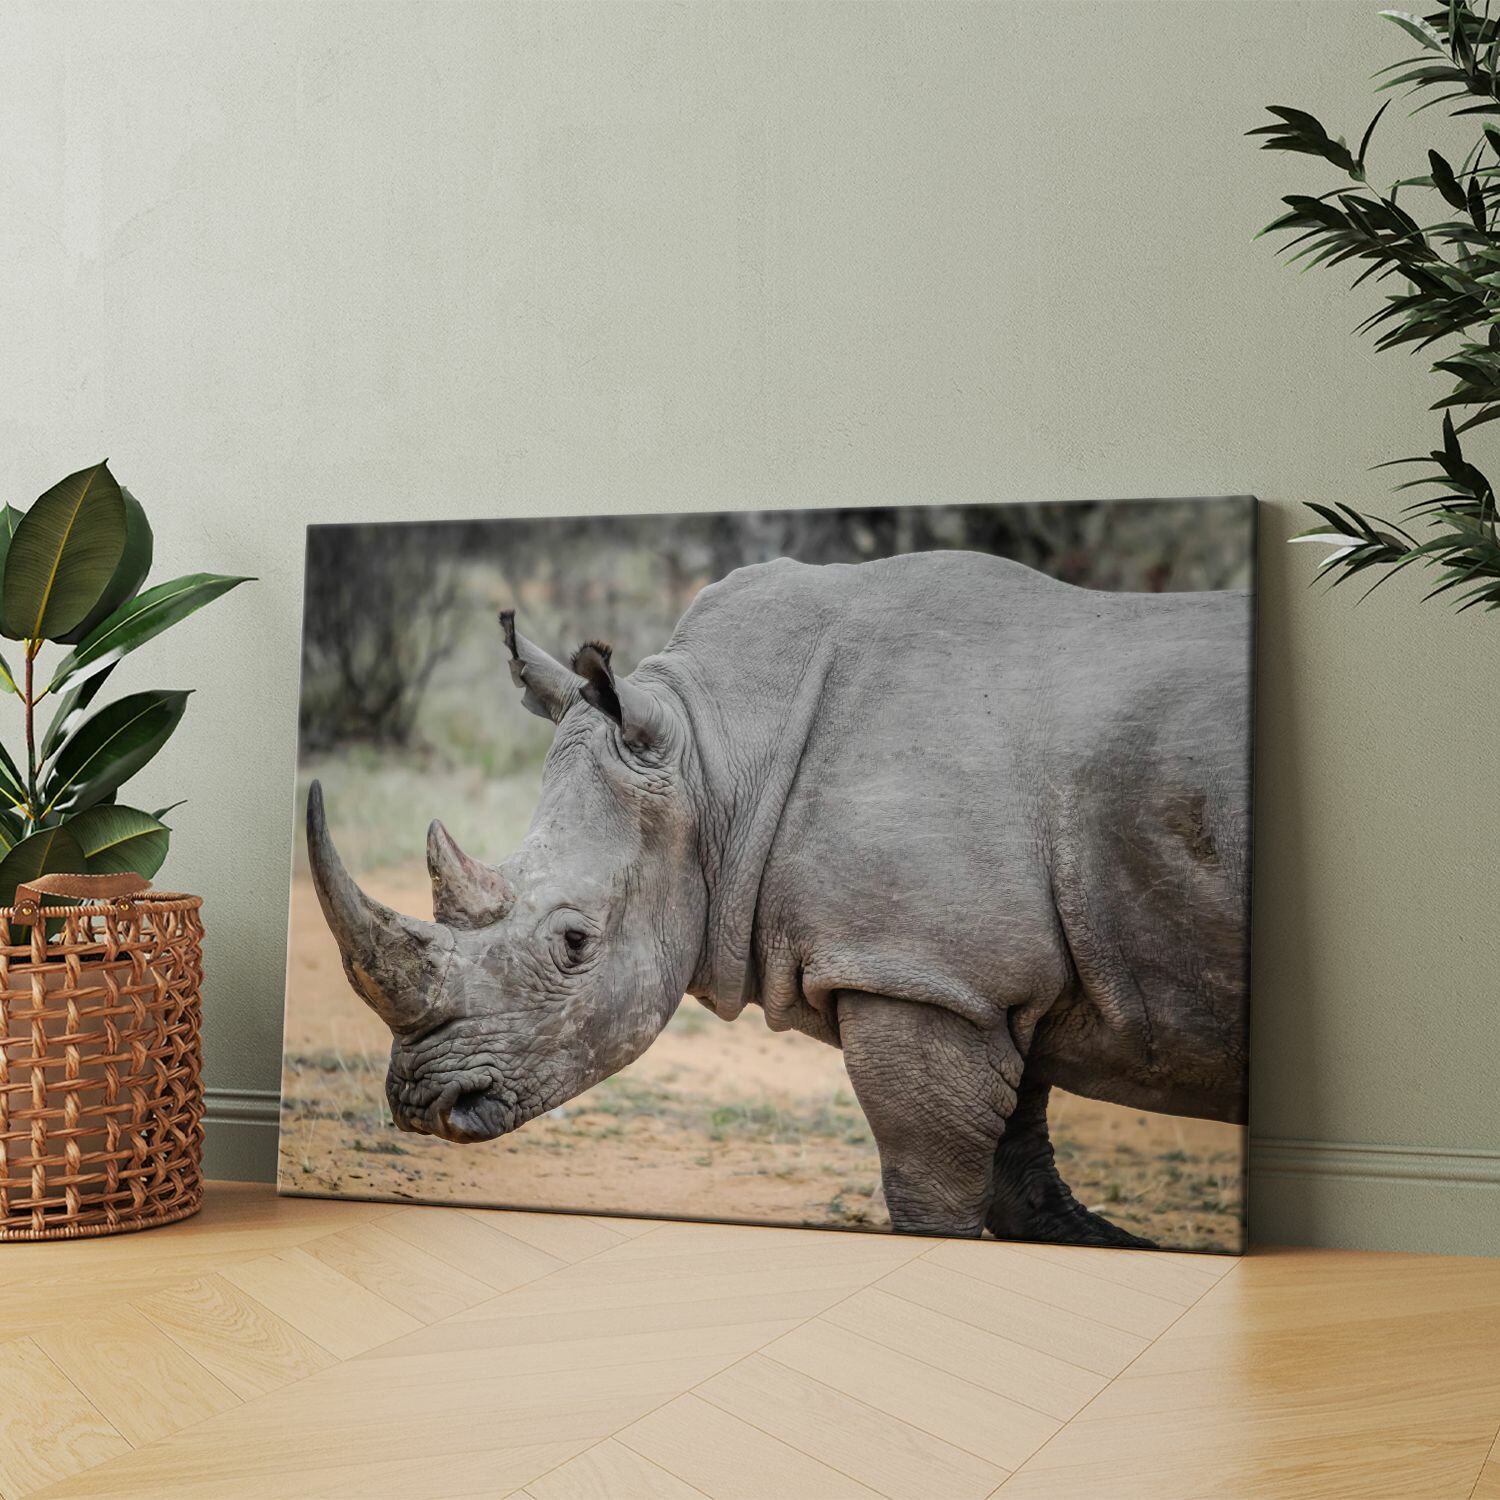 Картина на холсте (Африканский носорог) 40x60 см. Интерьерная, на стену.